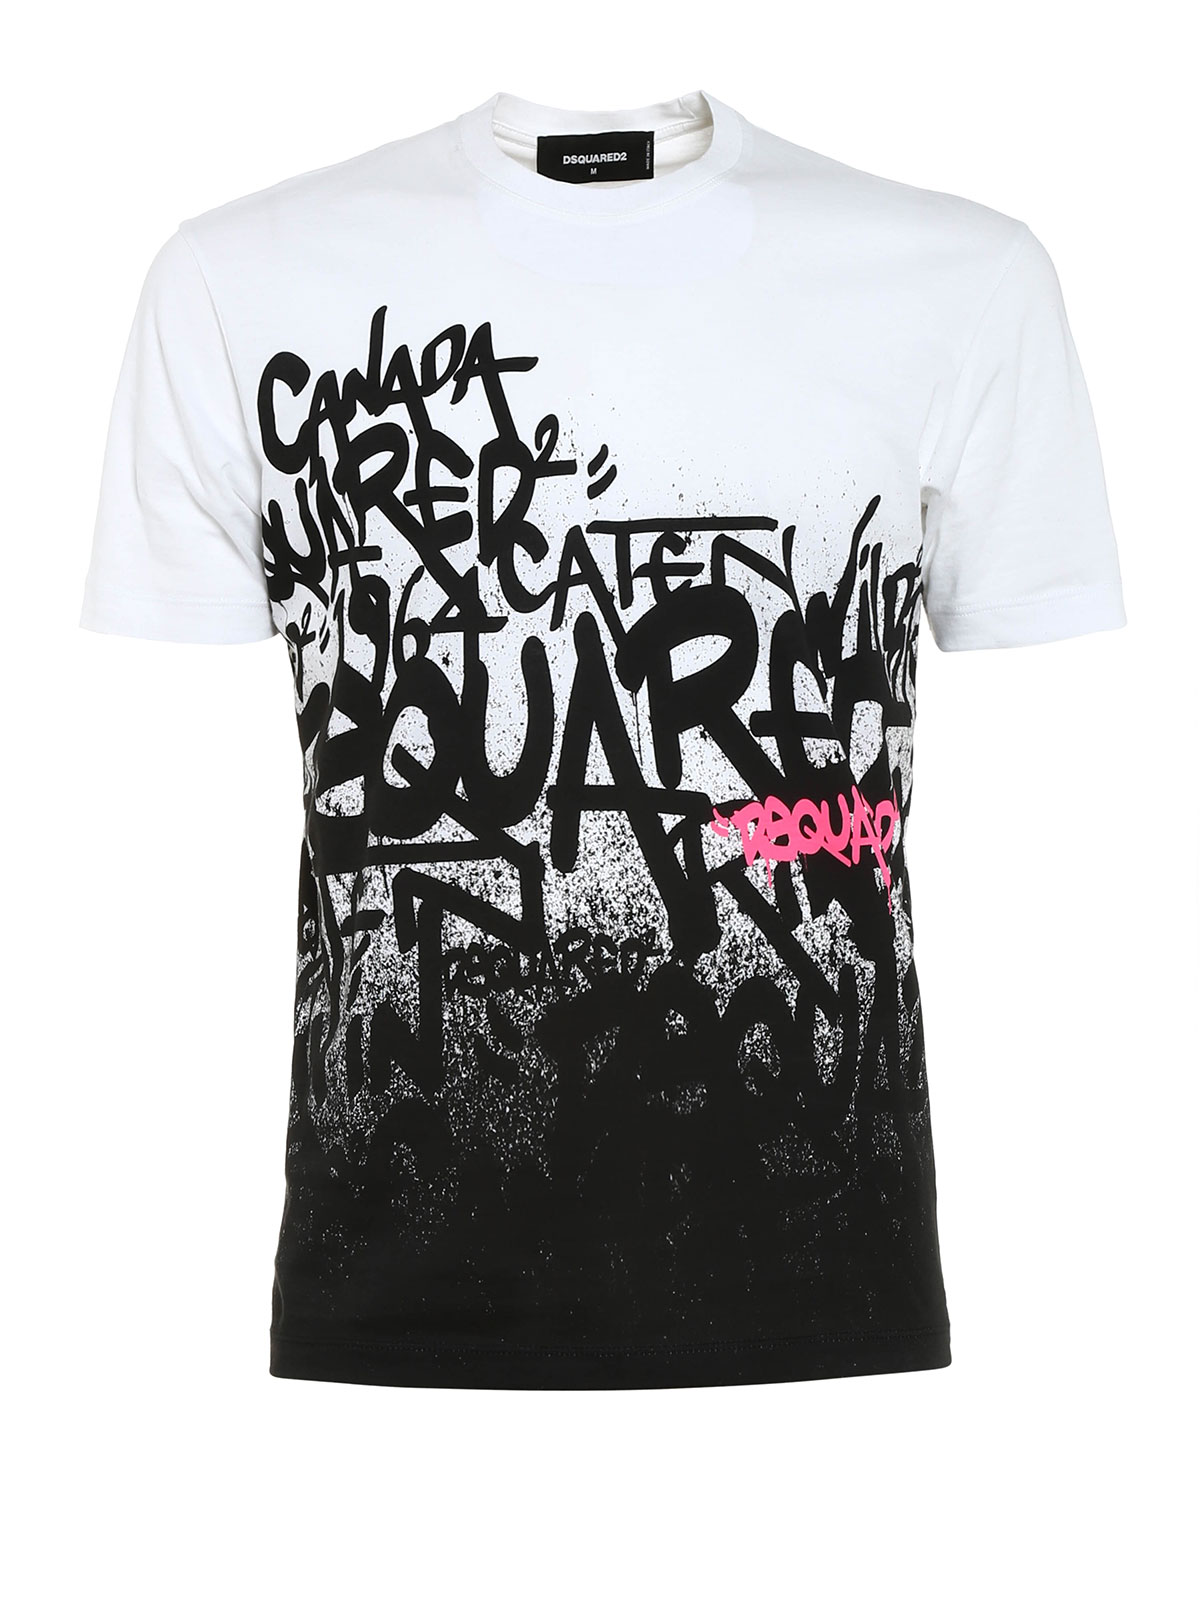 dsquared2 graffiti t shirt